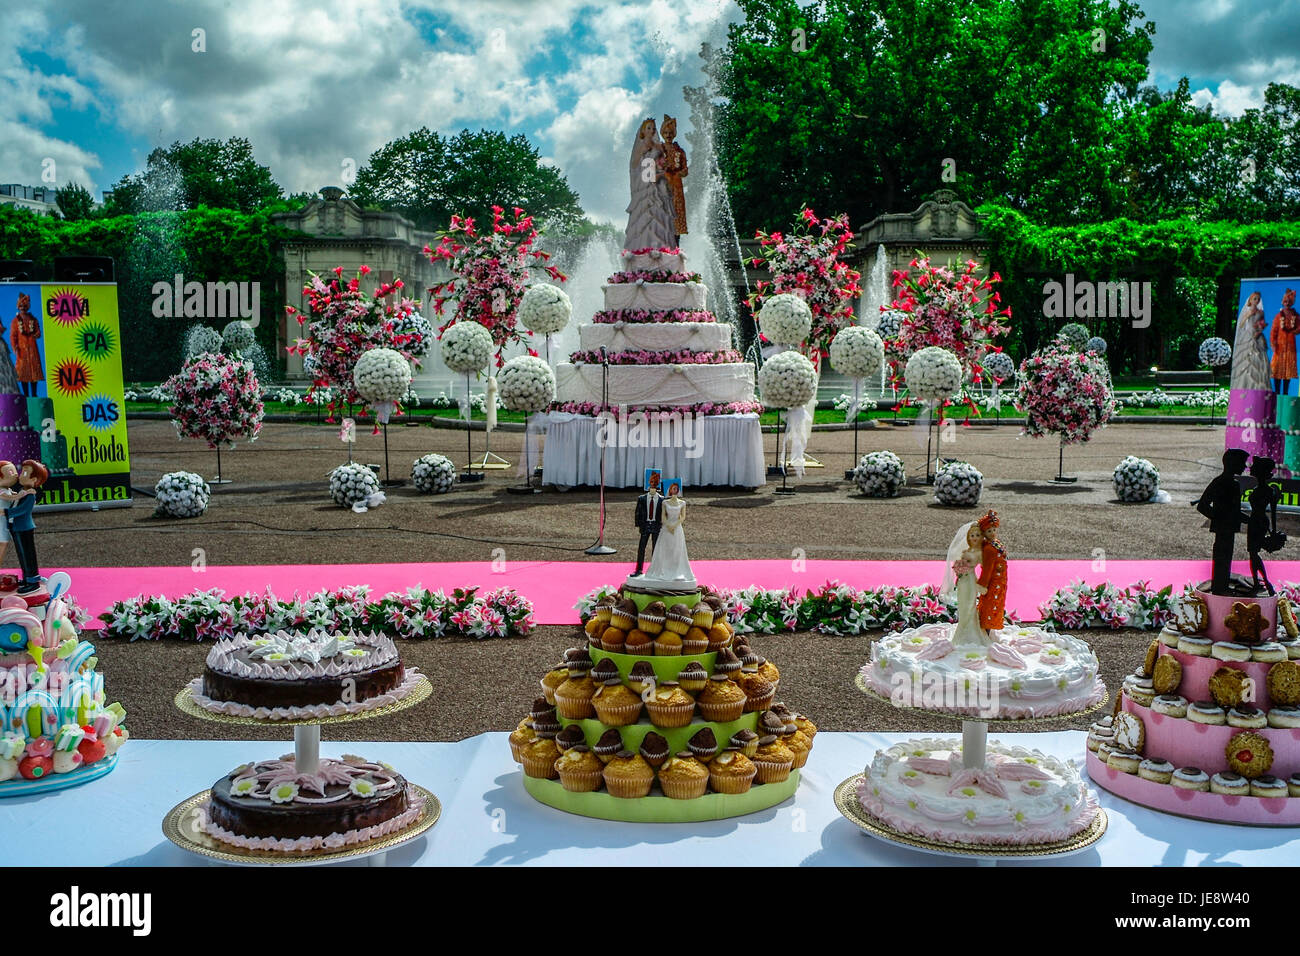 BILBAO SPAIN - WEDDING CELEBRATION IN  A PARC 2013 - WEDDING - WEDDING CAKE - WEDDING DAY © Frédéric BEAUMONT Stock Photo